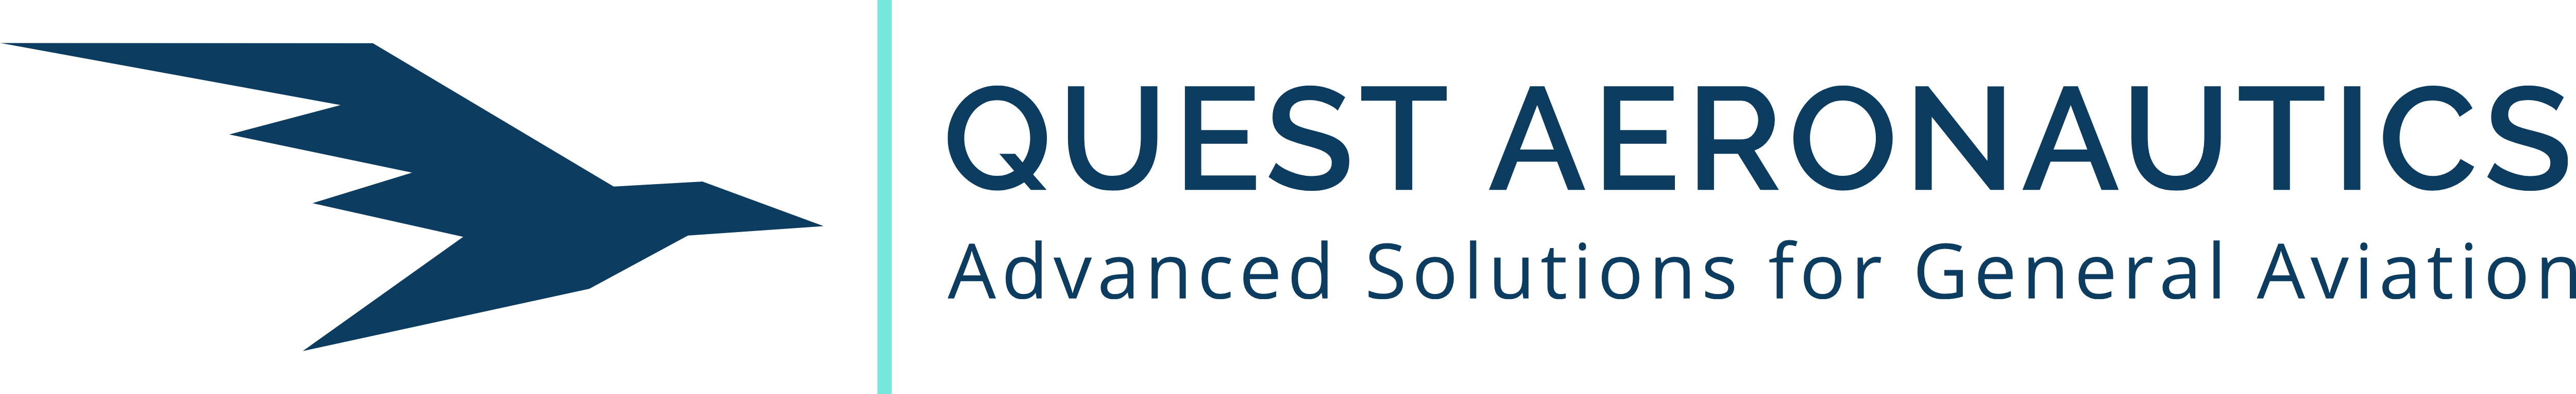 Quest Aeronautics - Logo_light